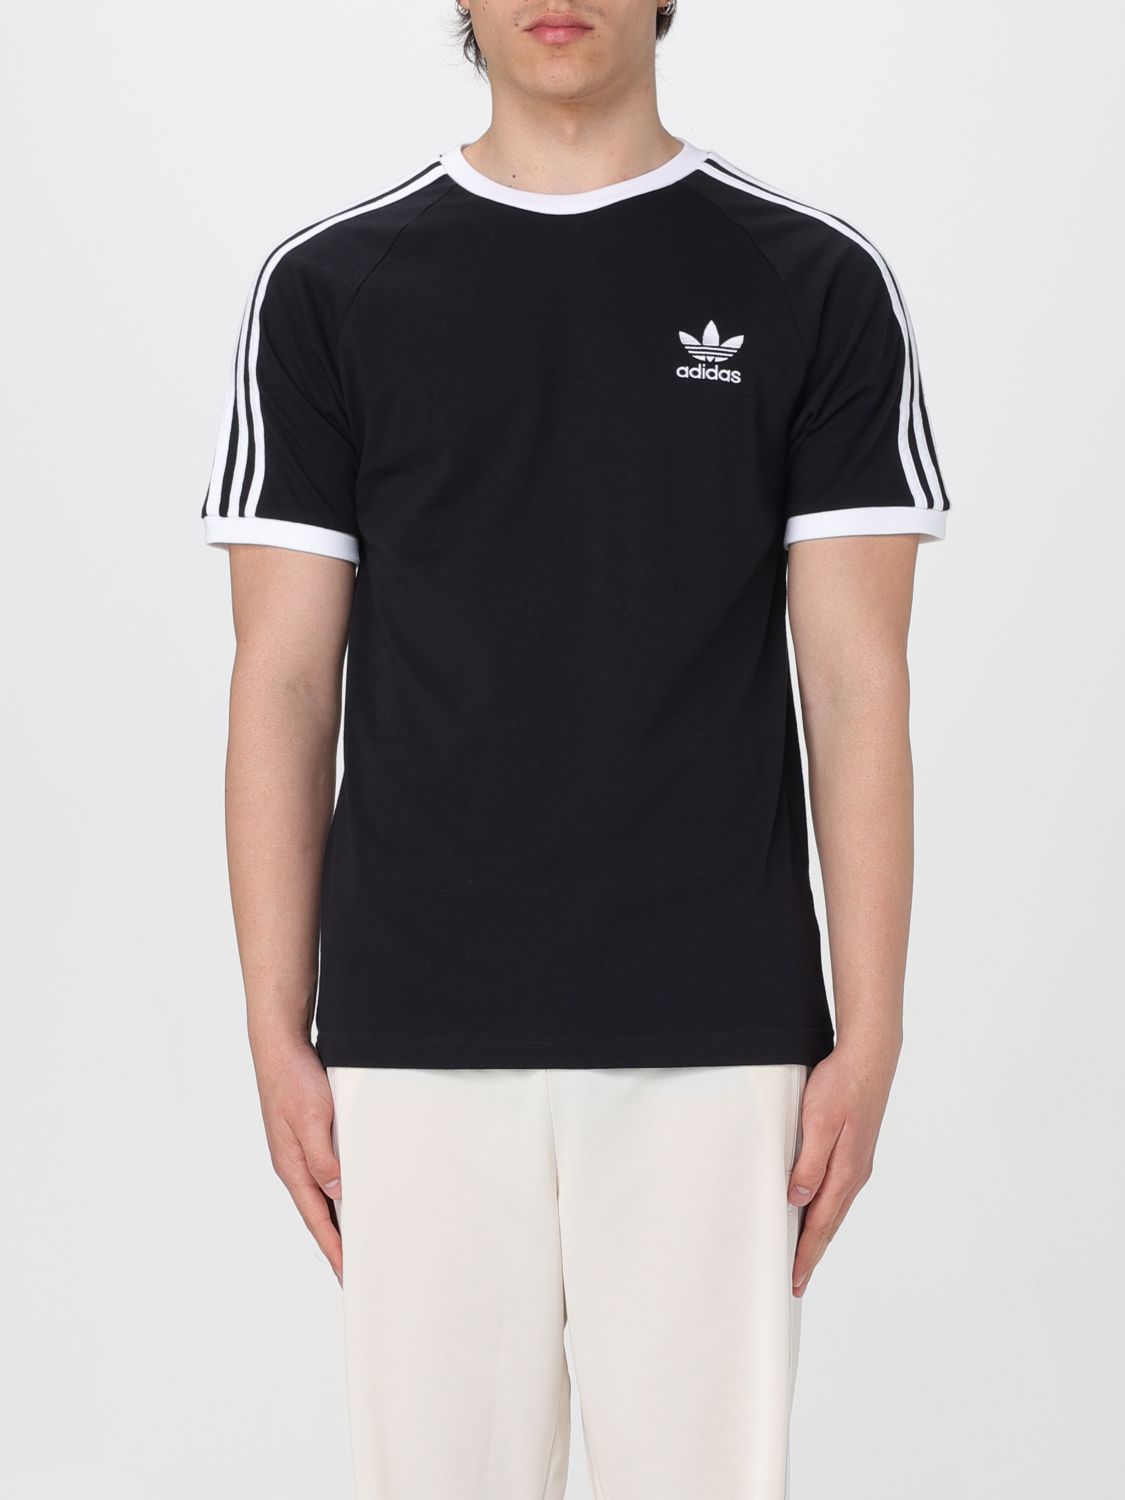 Adidas Originals T-Shirt ADIDAS ORIGINALS Men colour Black